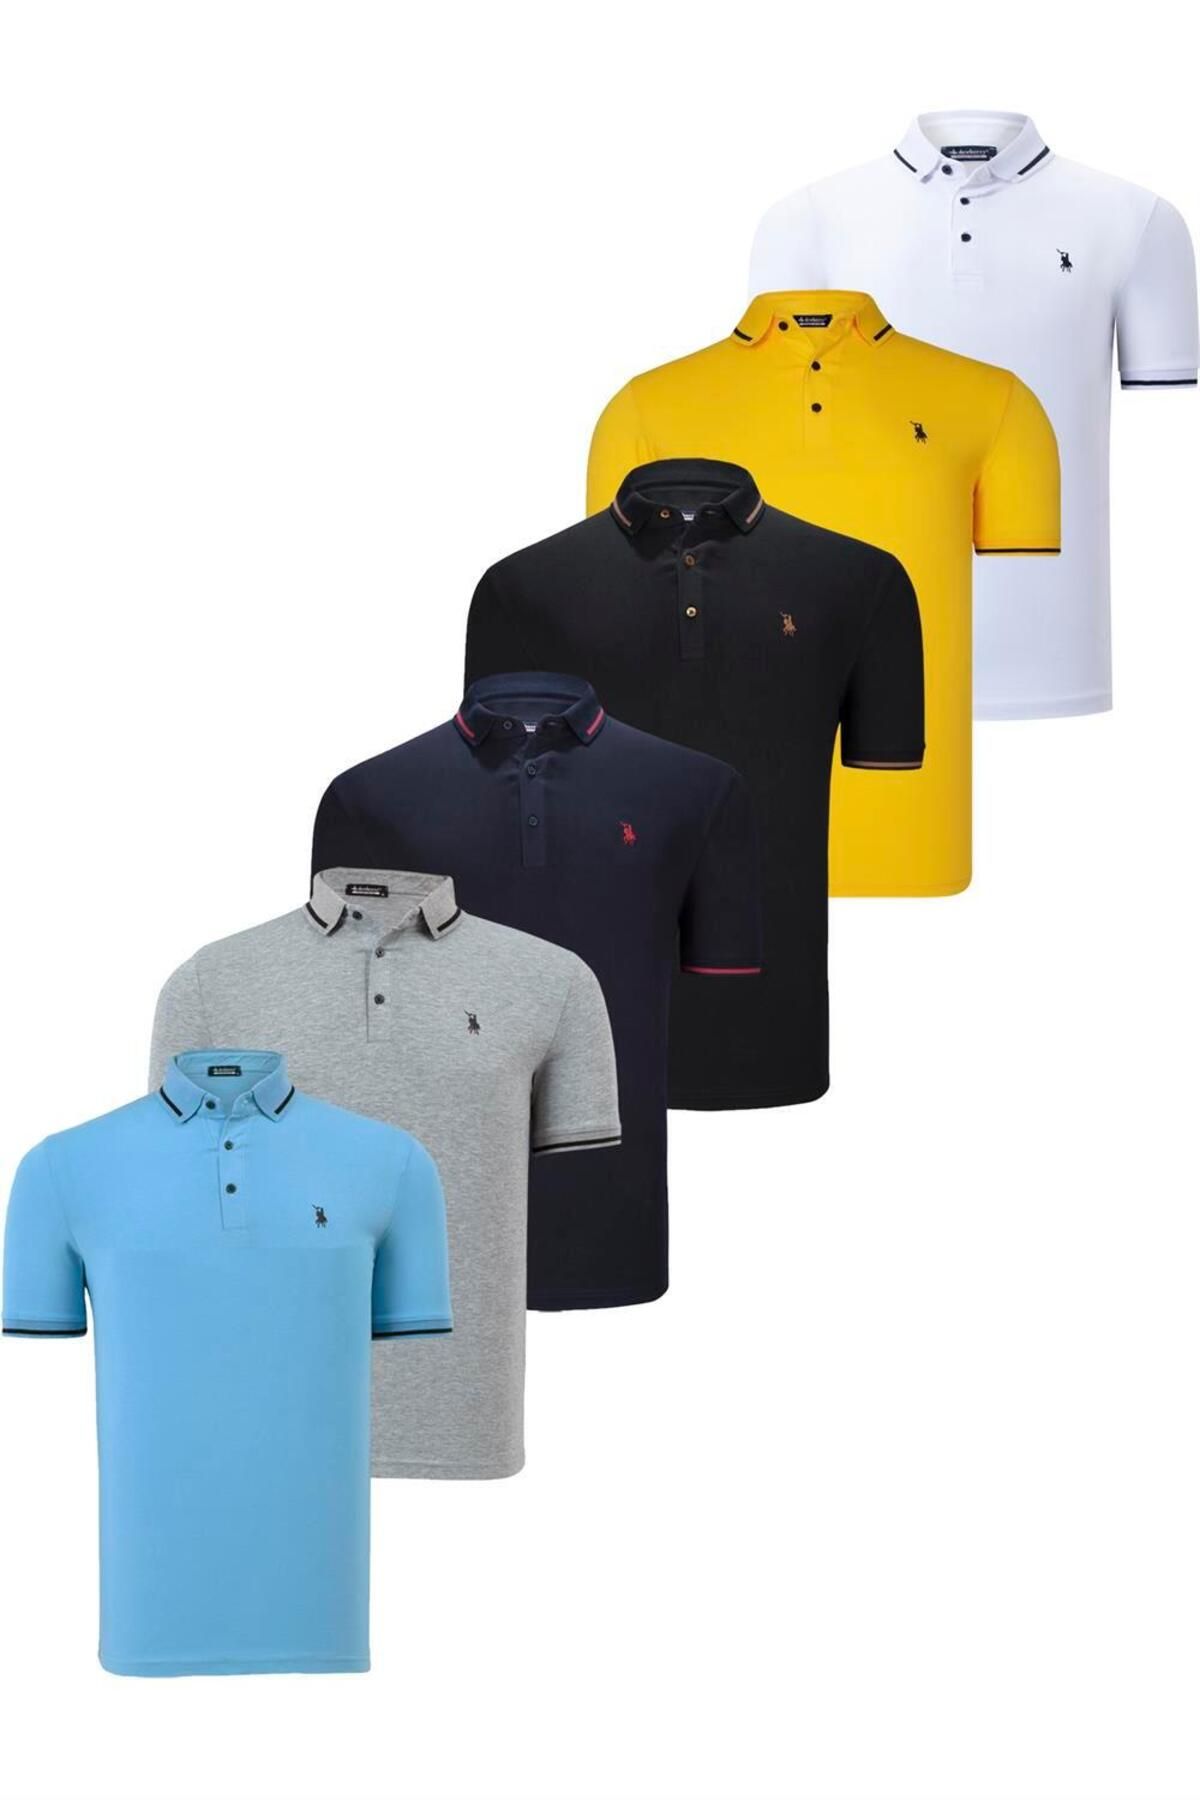 Dewberry ست شش عددی تی شرت مردانه T8586 DEWBERRY-مشکی-سفید-آبی تیره-خاکستری-آبی روشن-زرد